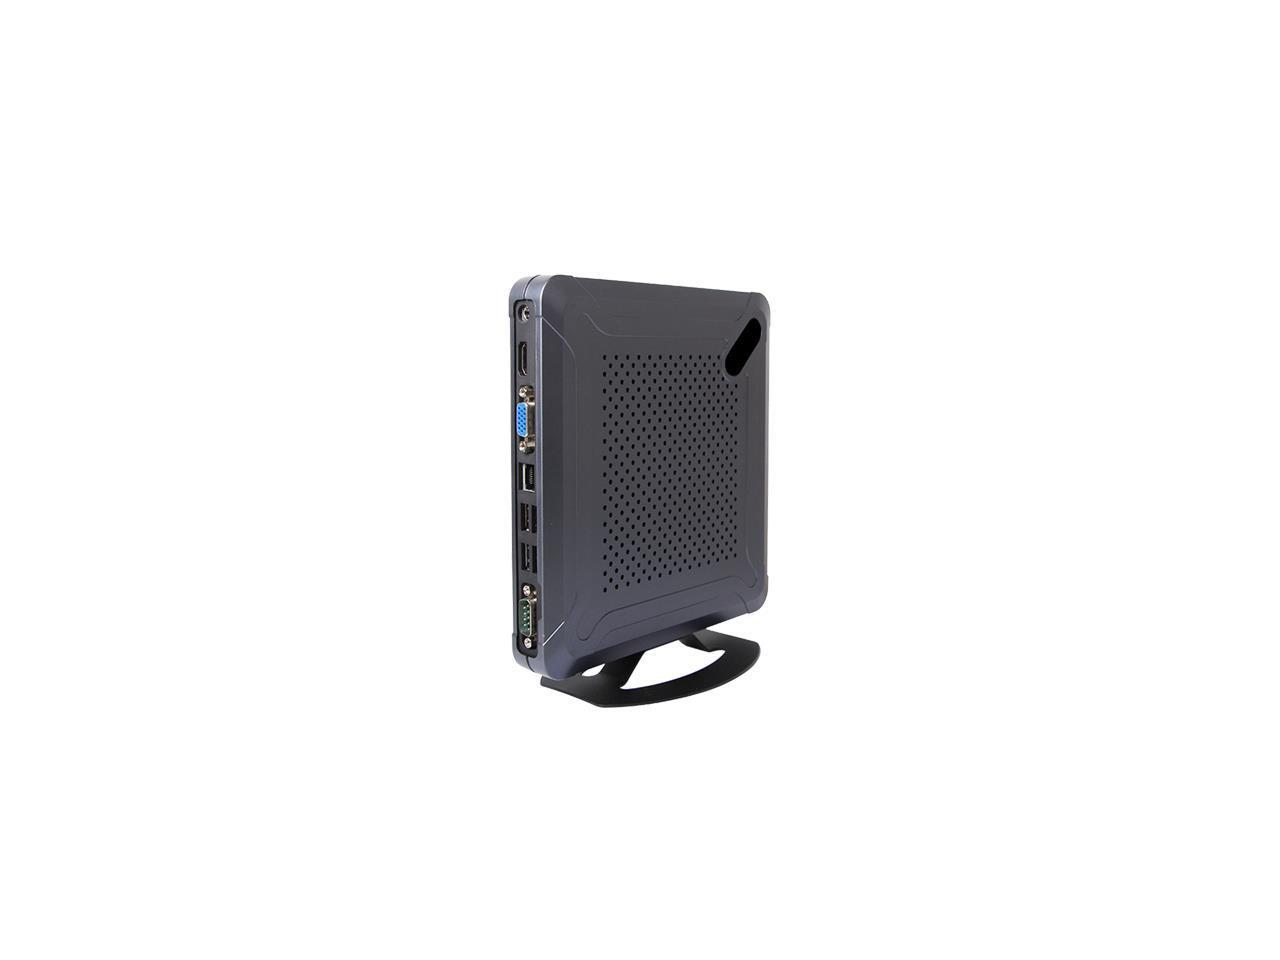 Mini PC,Desktop Computer,with Windows 10 Pro/Linux Ubuntu support,Intel Core I7 3537U,(Black),[HUNSN BH06],[COM/VGA/HDMI/LAN/ 8*USB2.0/ With Cooling fan],(8G RAM/128G SSD)